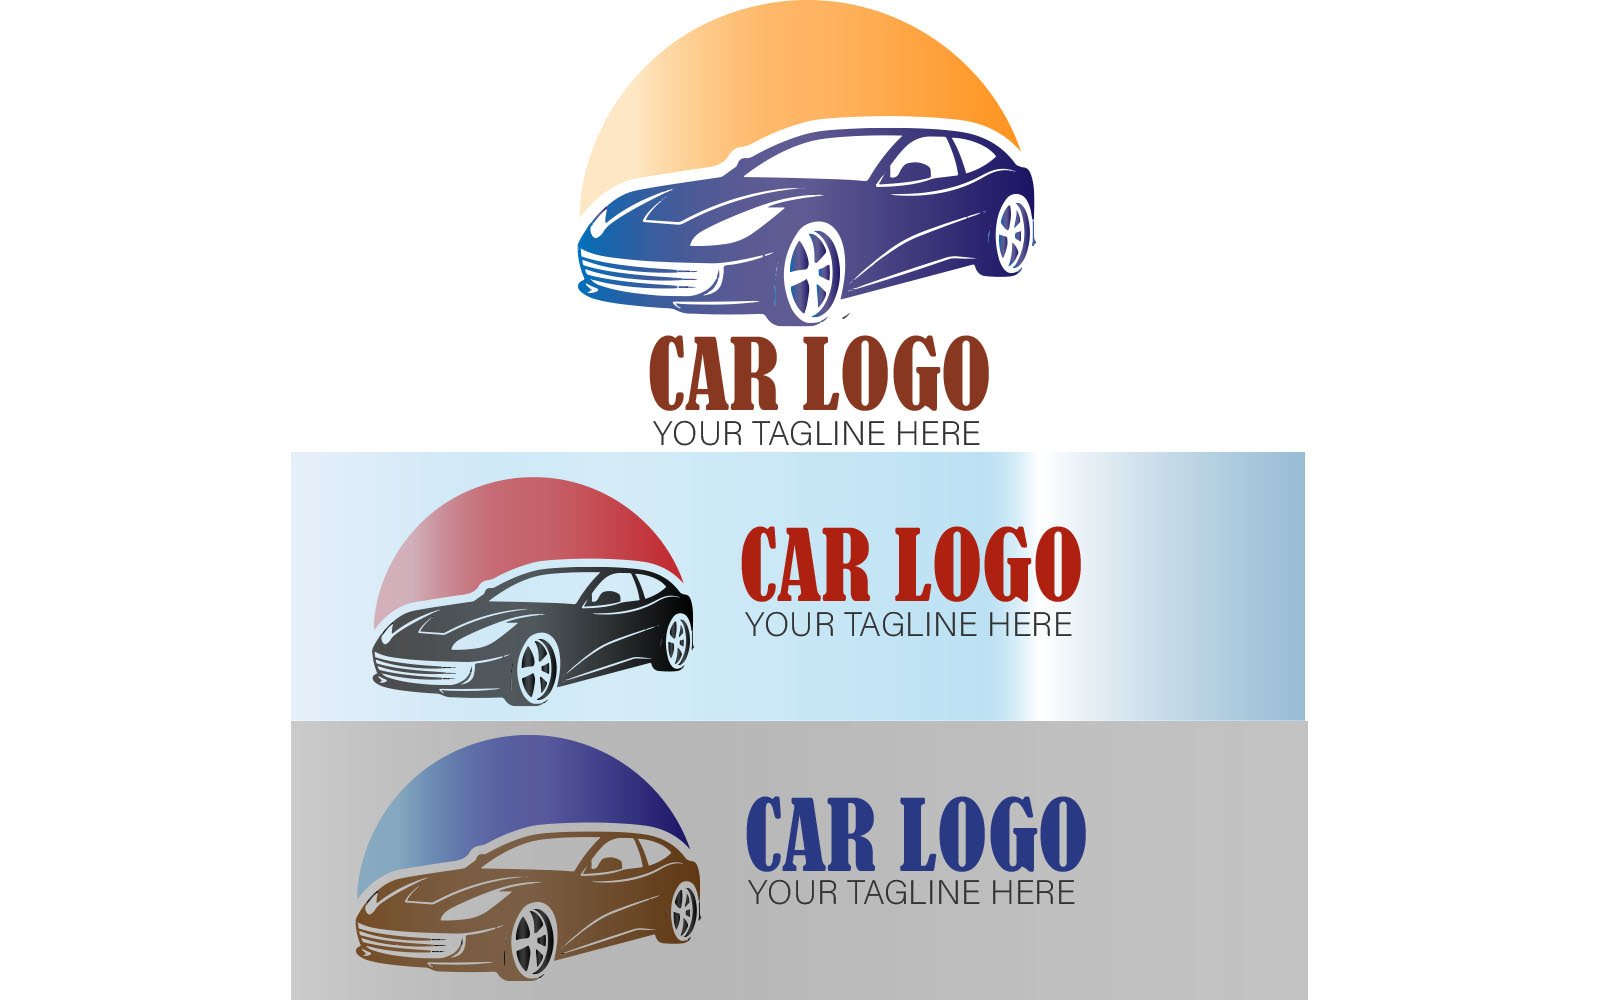 Template #271115 Car Cars Webdesign Template - Logo template Preview